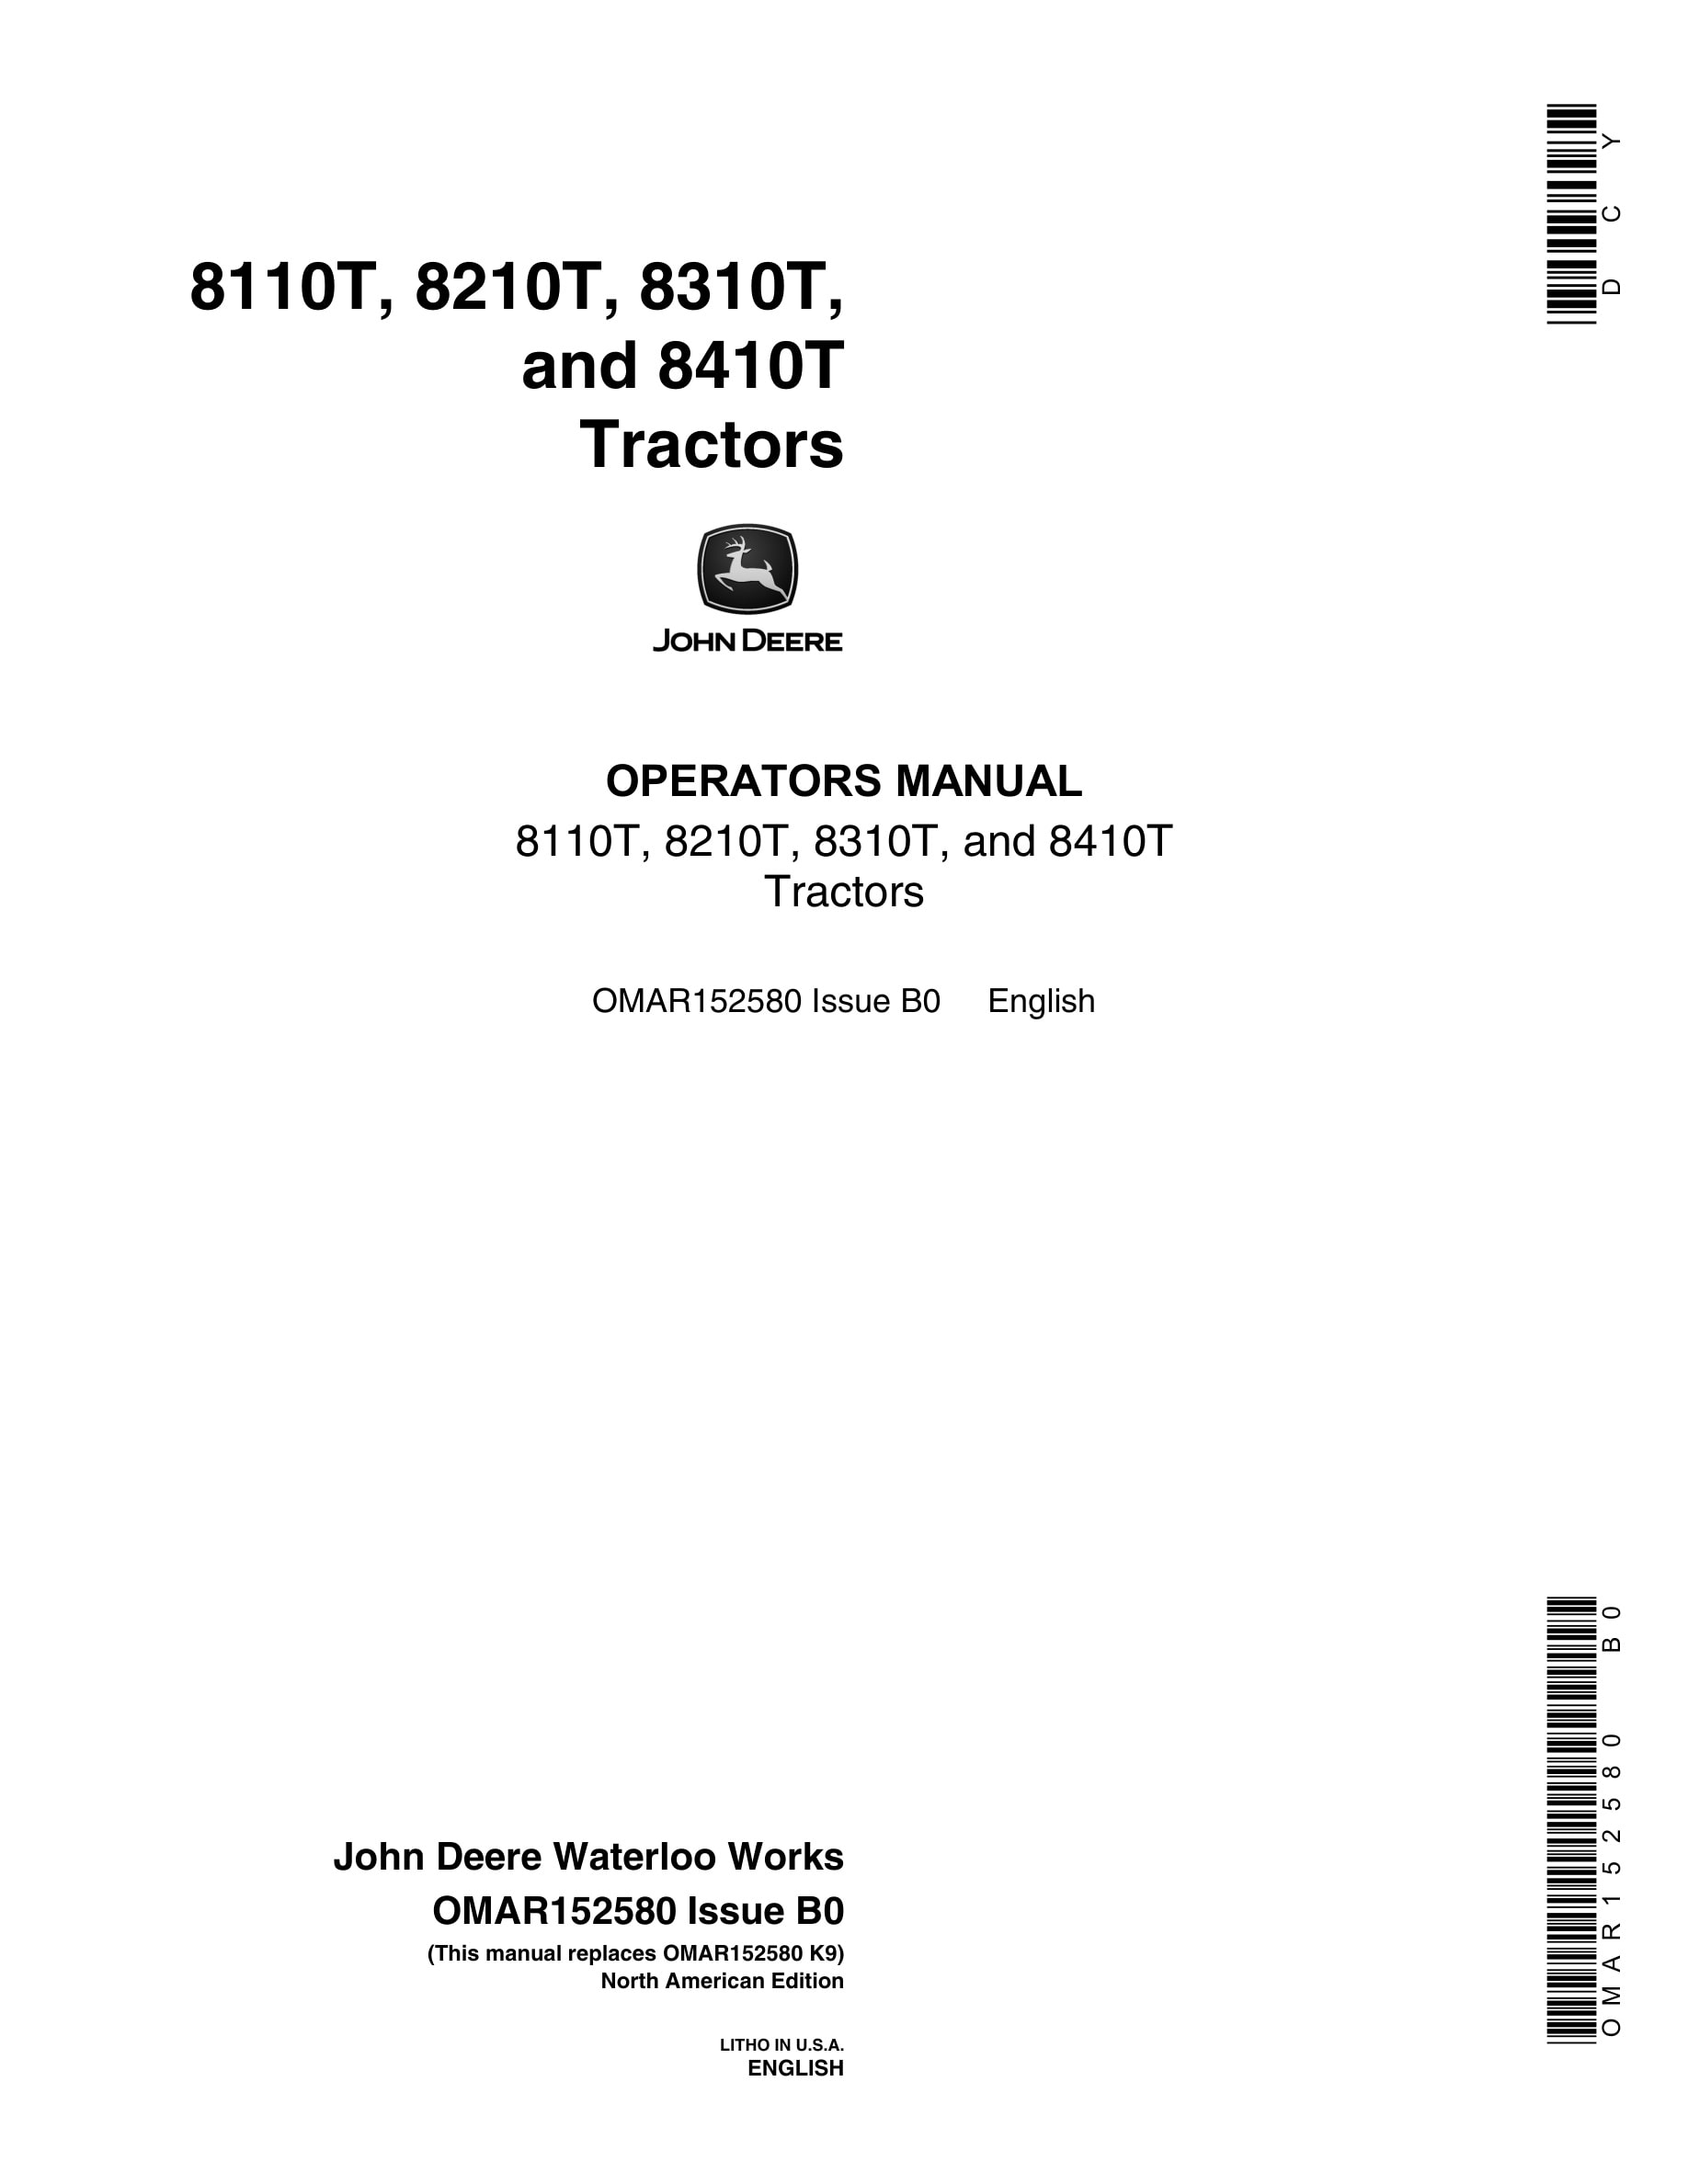 John Deere 8110T, 8210T, 8310T, and 8410T Tractor Operator Manual OMAR152580-1